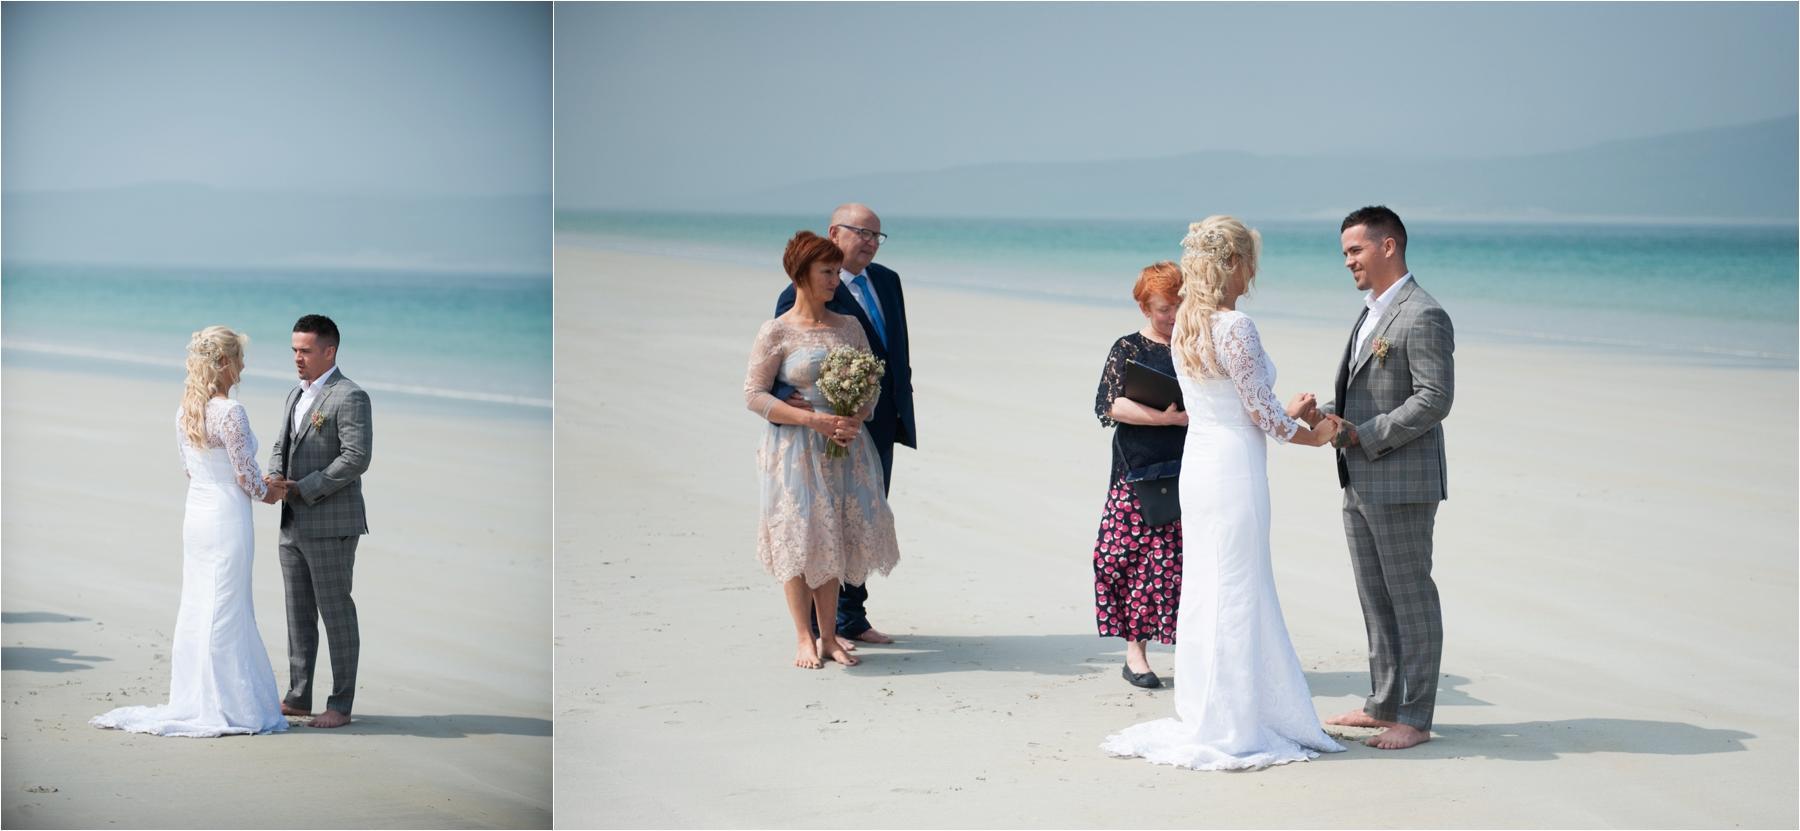 Scottish island beach wedding photographer